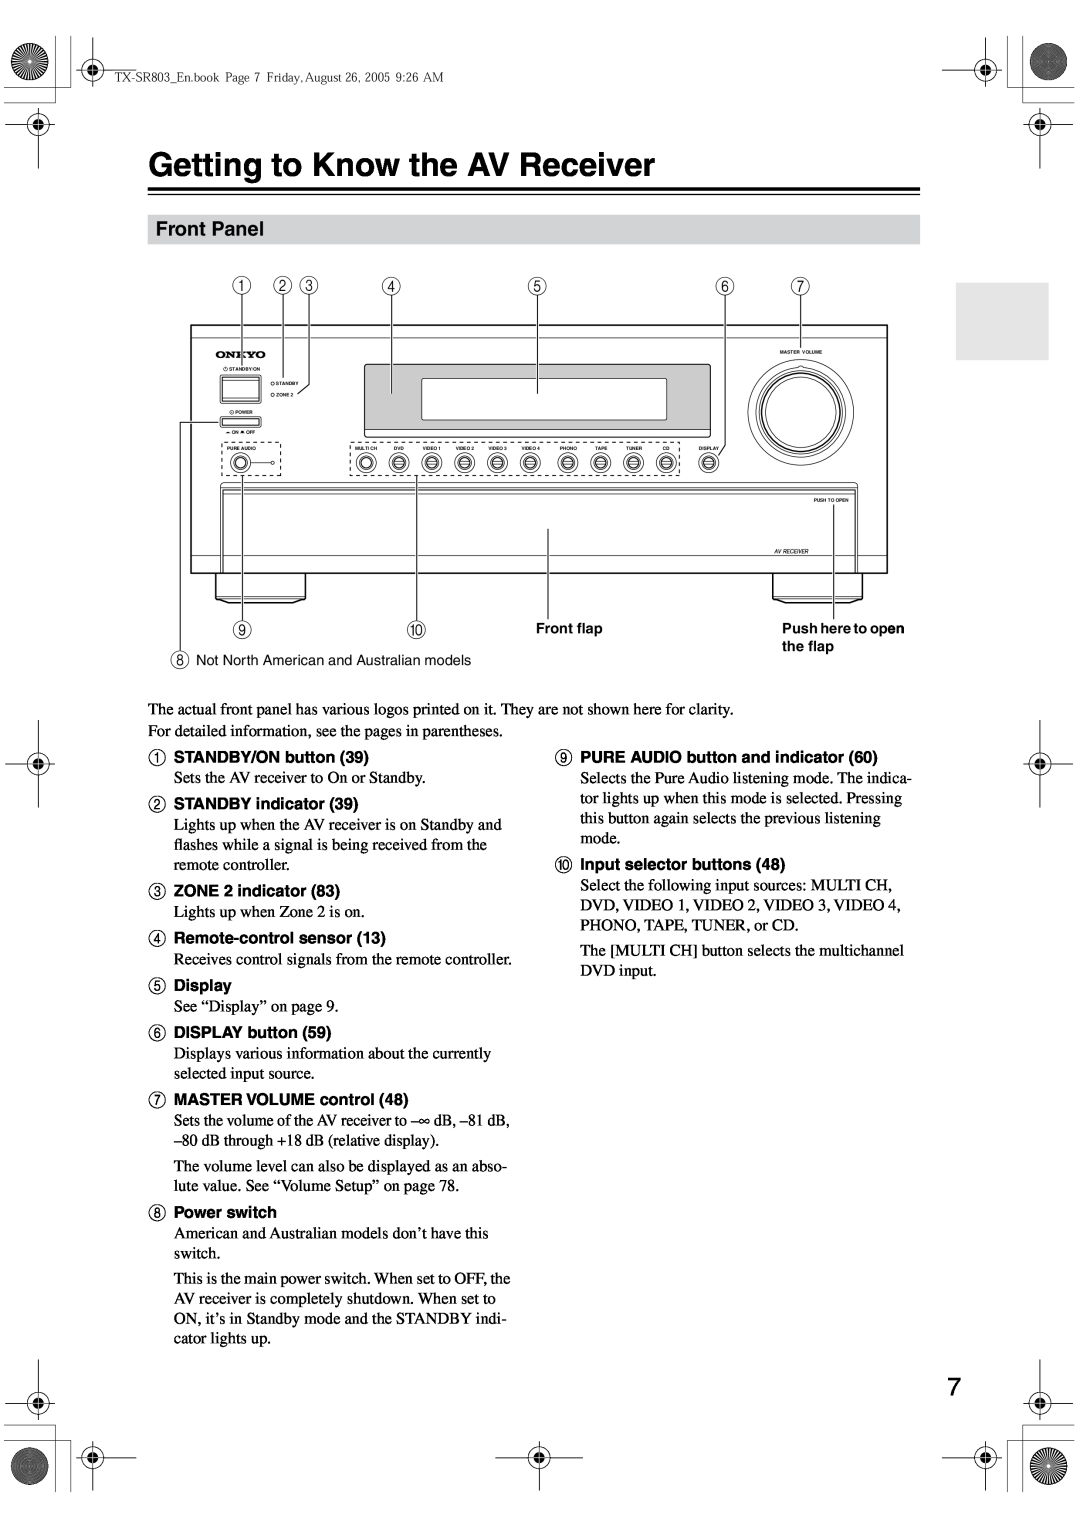 Onkyo TX-SR703E, TX-SR8370, TX-SR803, TX-SR 803E instruction manual Getting to Know the AV Receiver, Front Panel 